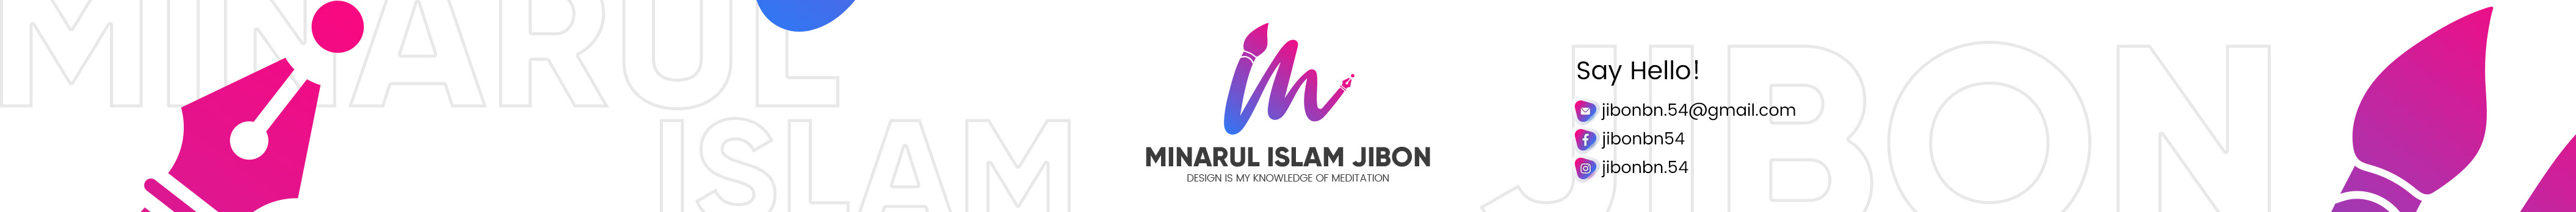 Minarul Islam Jibon のプロファイルバナー